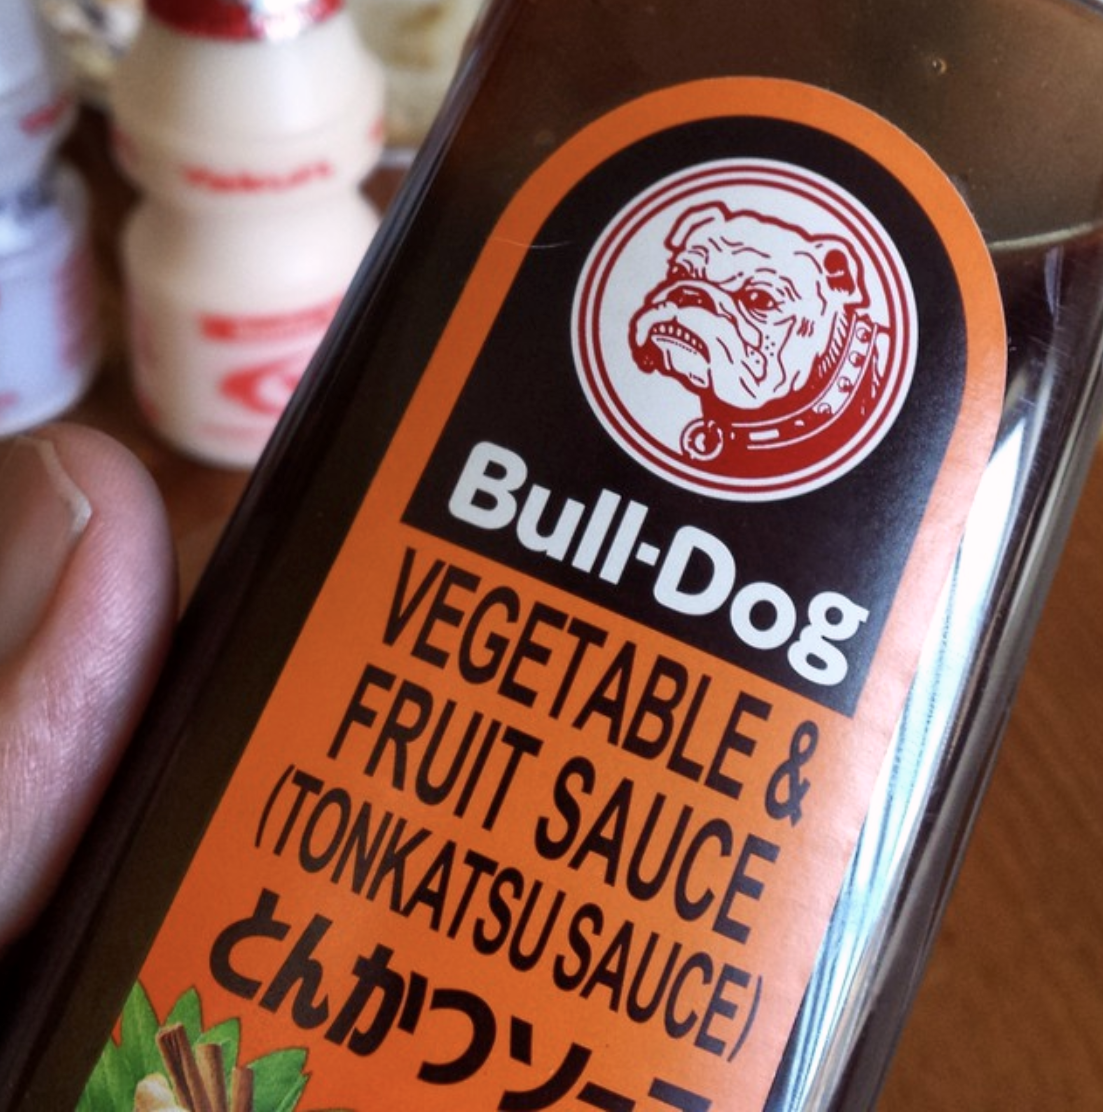 Sauce bulldog ©Richard Masoner CC BY-SA 2.0